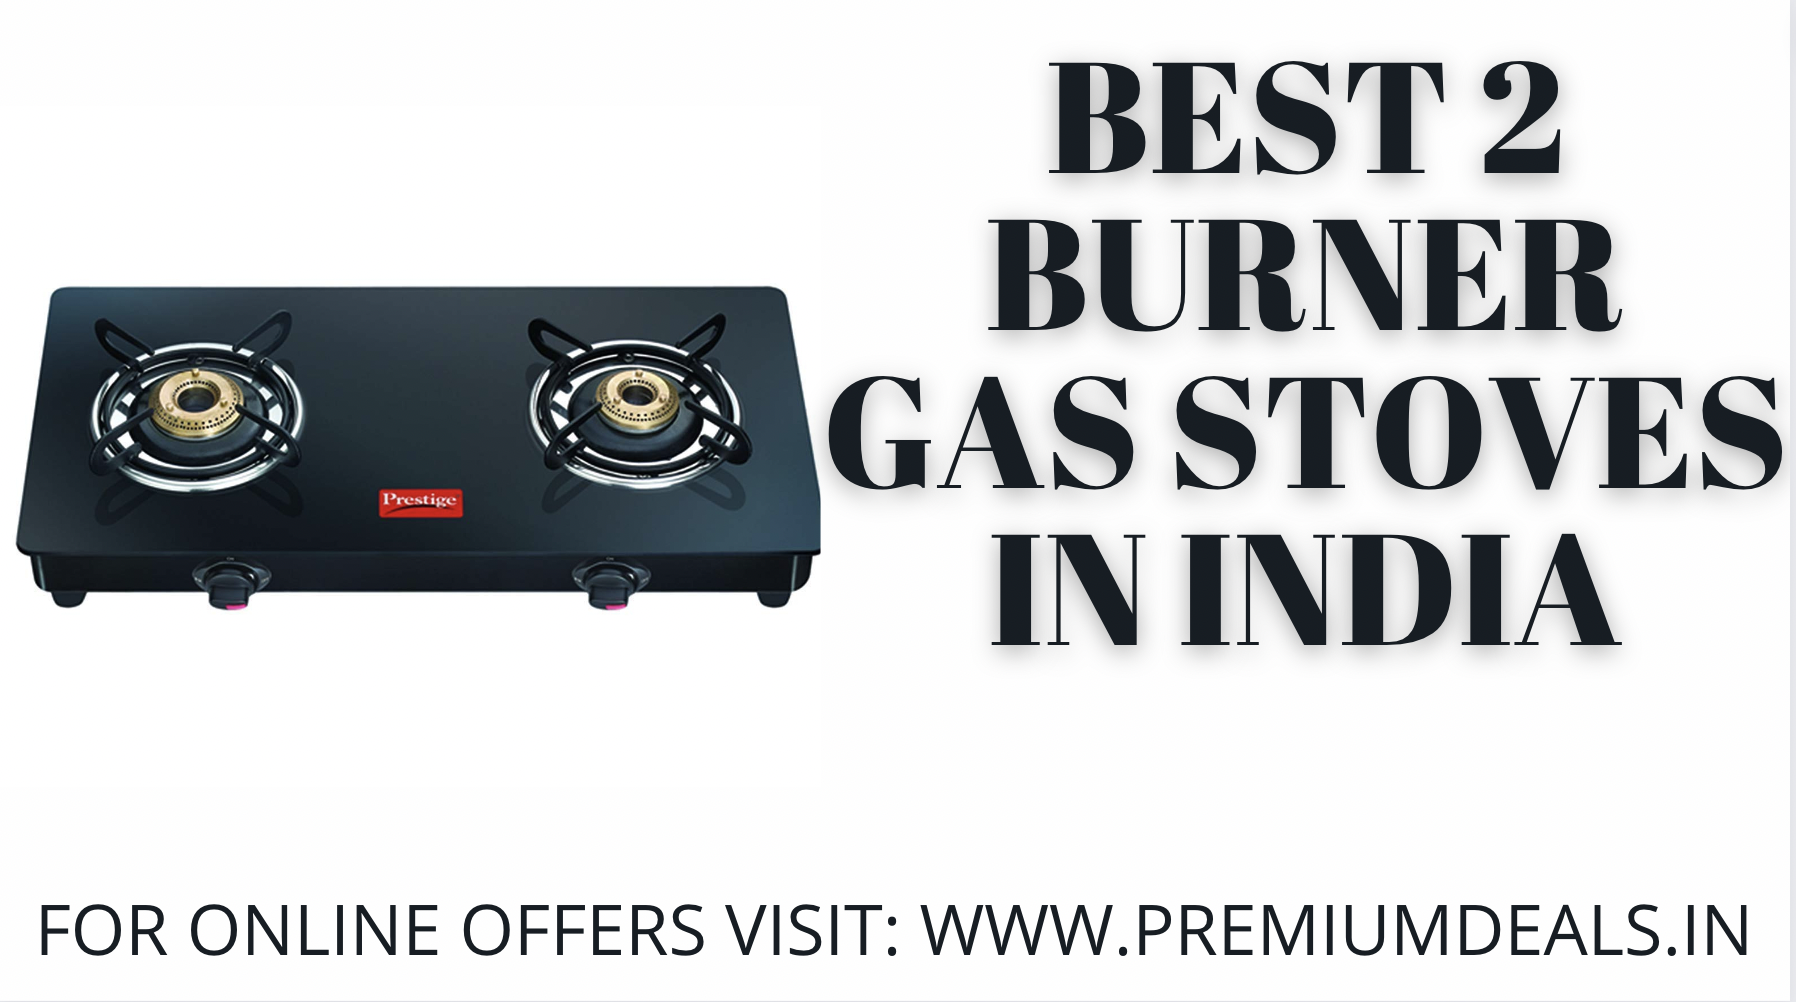 BEST 2 BURNER GAS STOVES IN INDIA